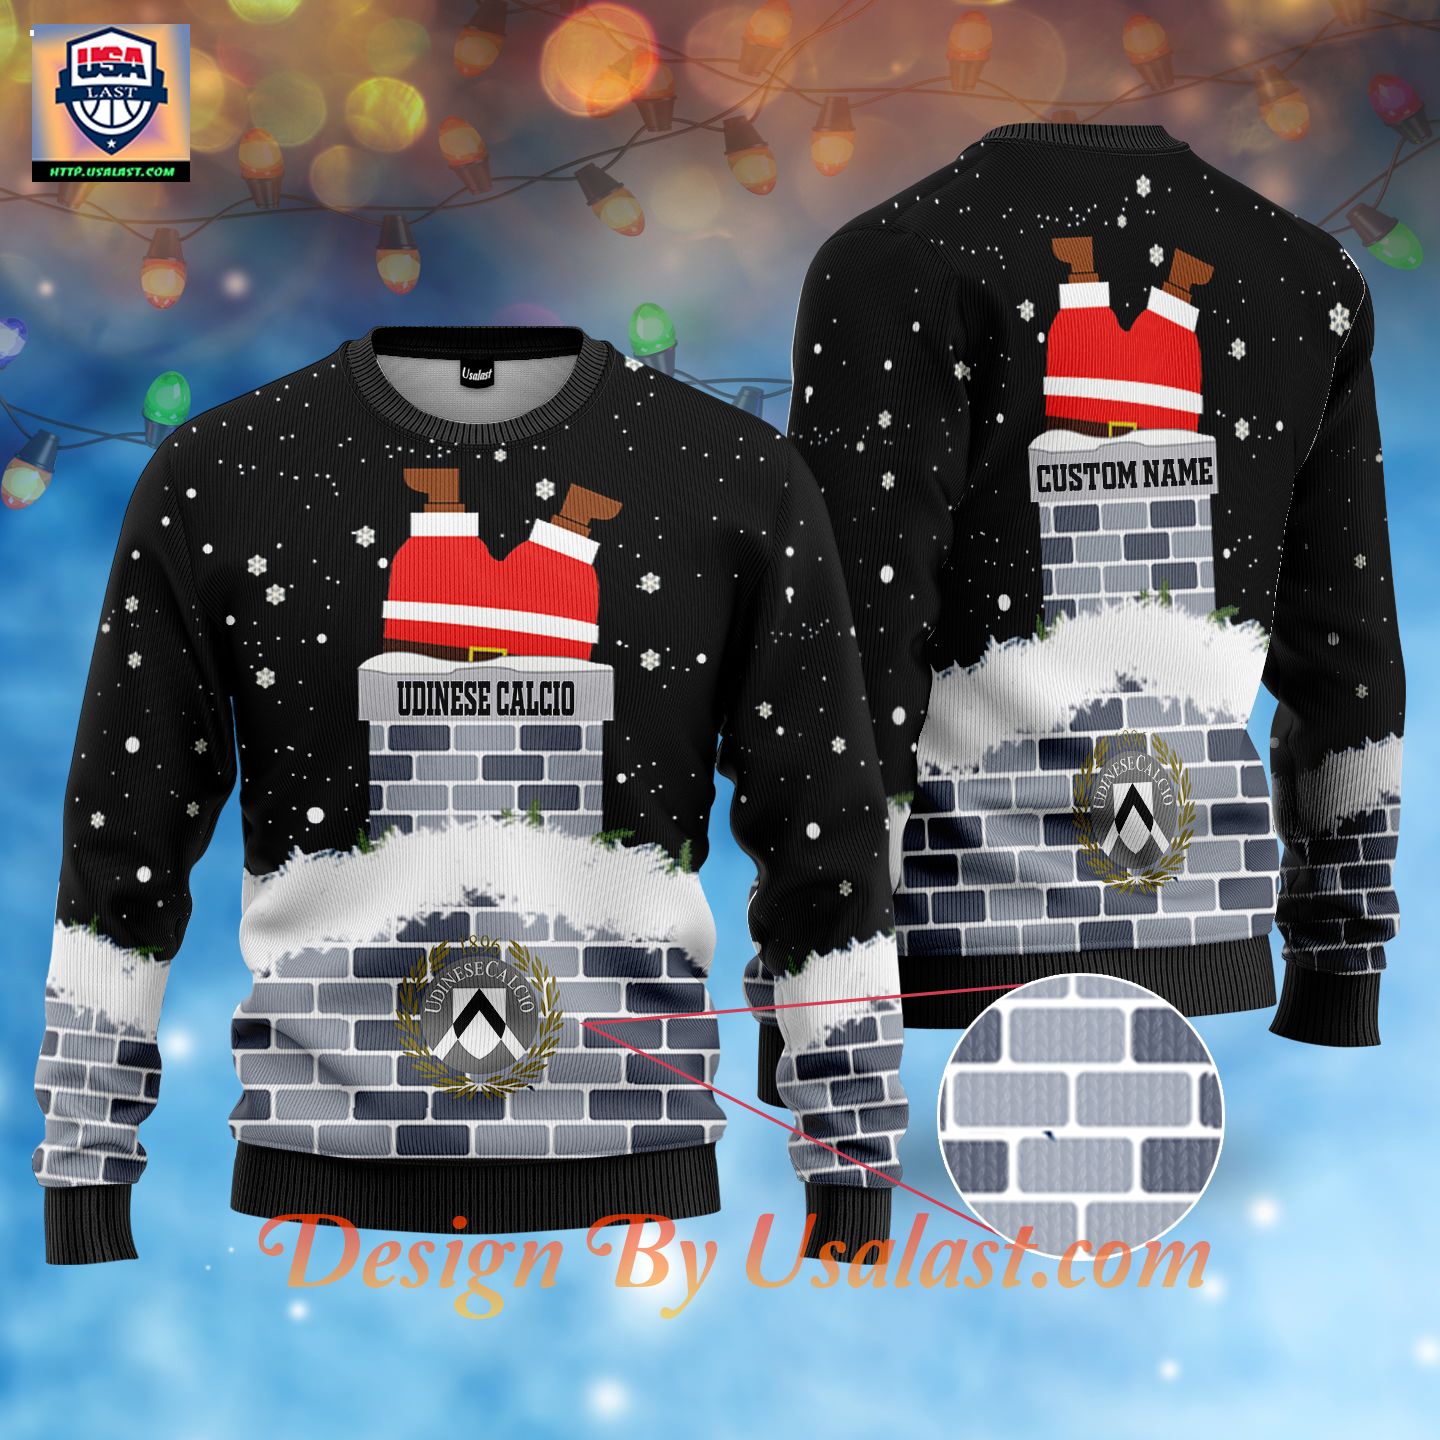 udinese-calcio-santa-claus-custom-name-black-ugly-christmas-sweater-1-PlL2r.jpg